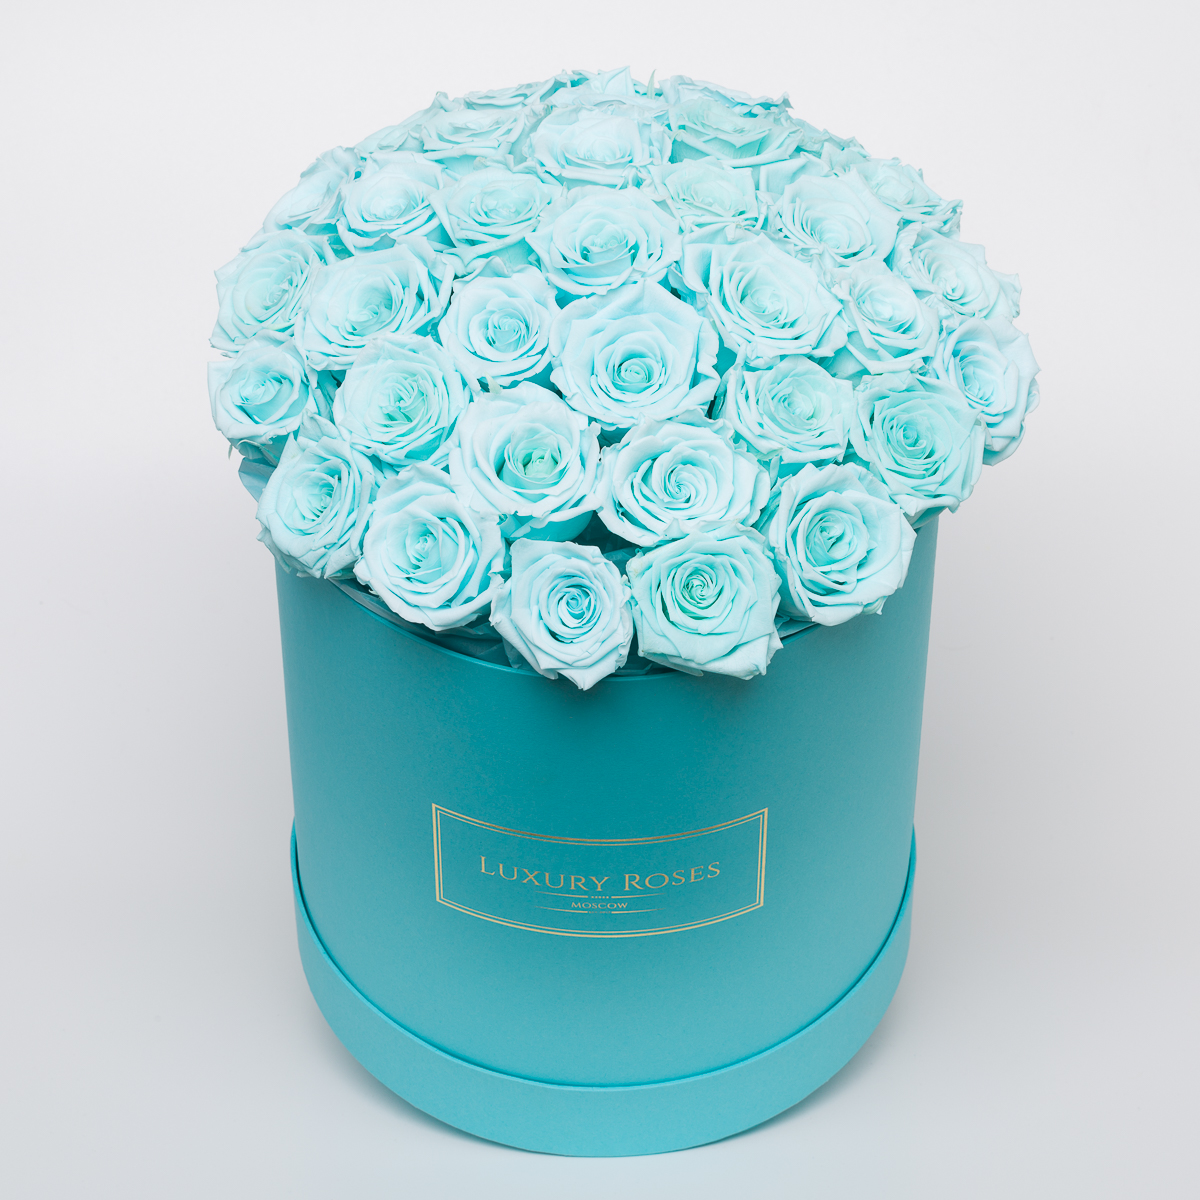 Букет из 31 розы цвета тиффани в шляпной тиффани коробке - Luxury Roses Спб